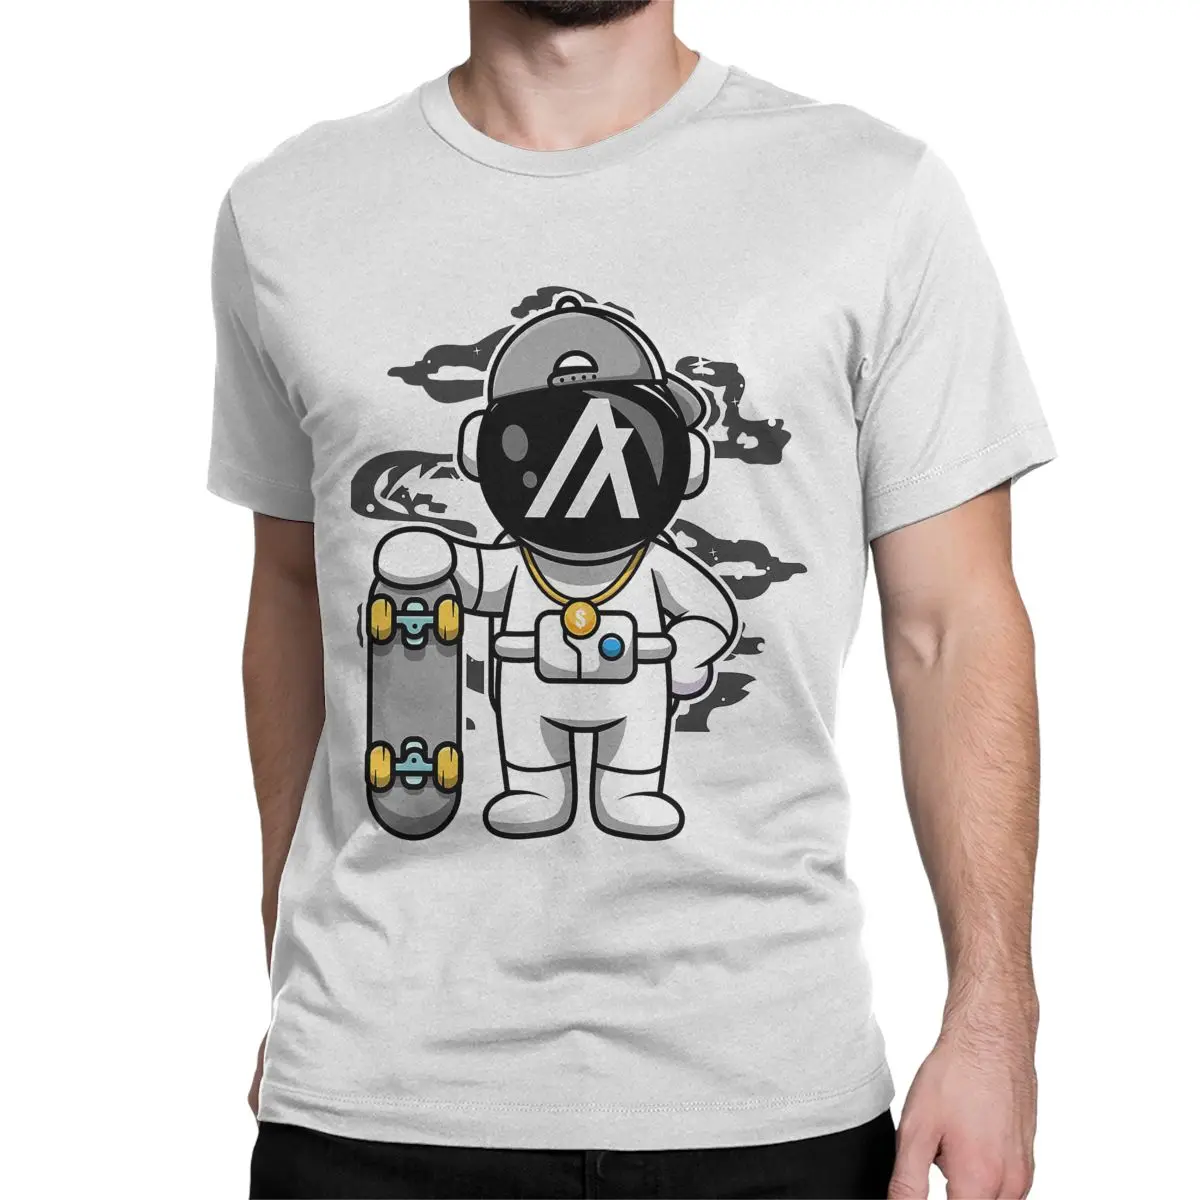 

Funny-Astronaut-Skate-Algorand-ALGO-Coin-To-The-Moon Men's shirt Hipster Cotton Tee Shirt Round Neck Short Sleeve T-Shirt